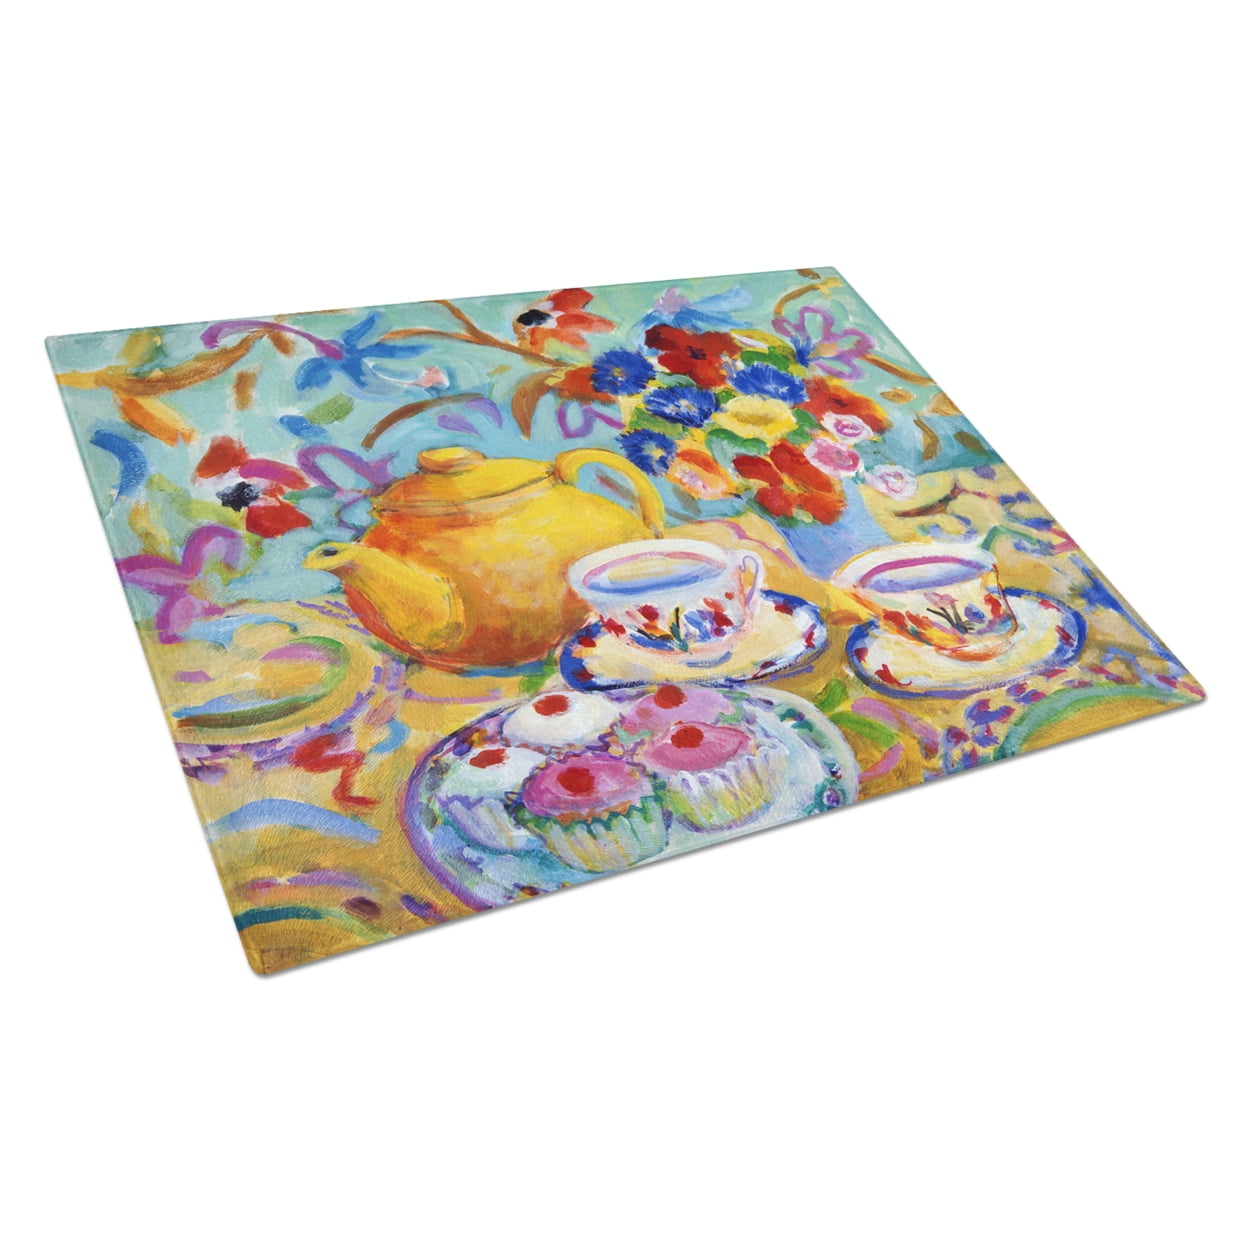 Caroline's Treasures 8654LCB Pineapple Glass Cutting Board Large, 12H x  16W, multicolor